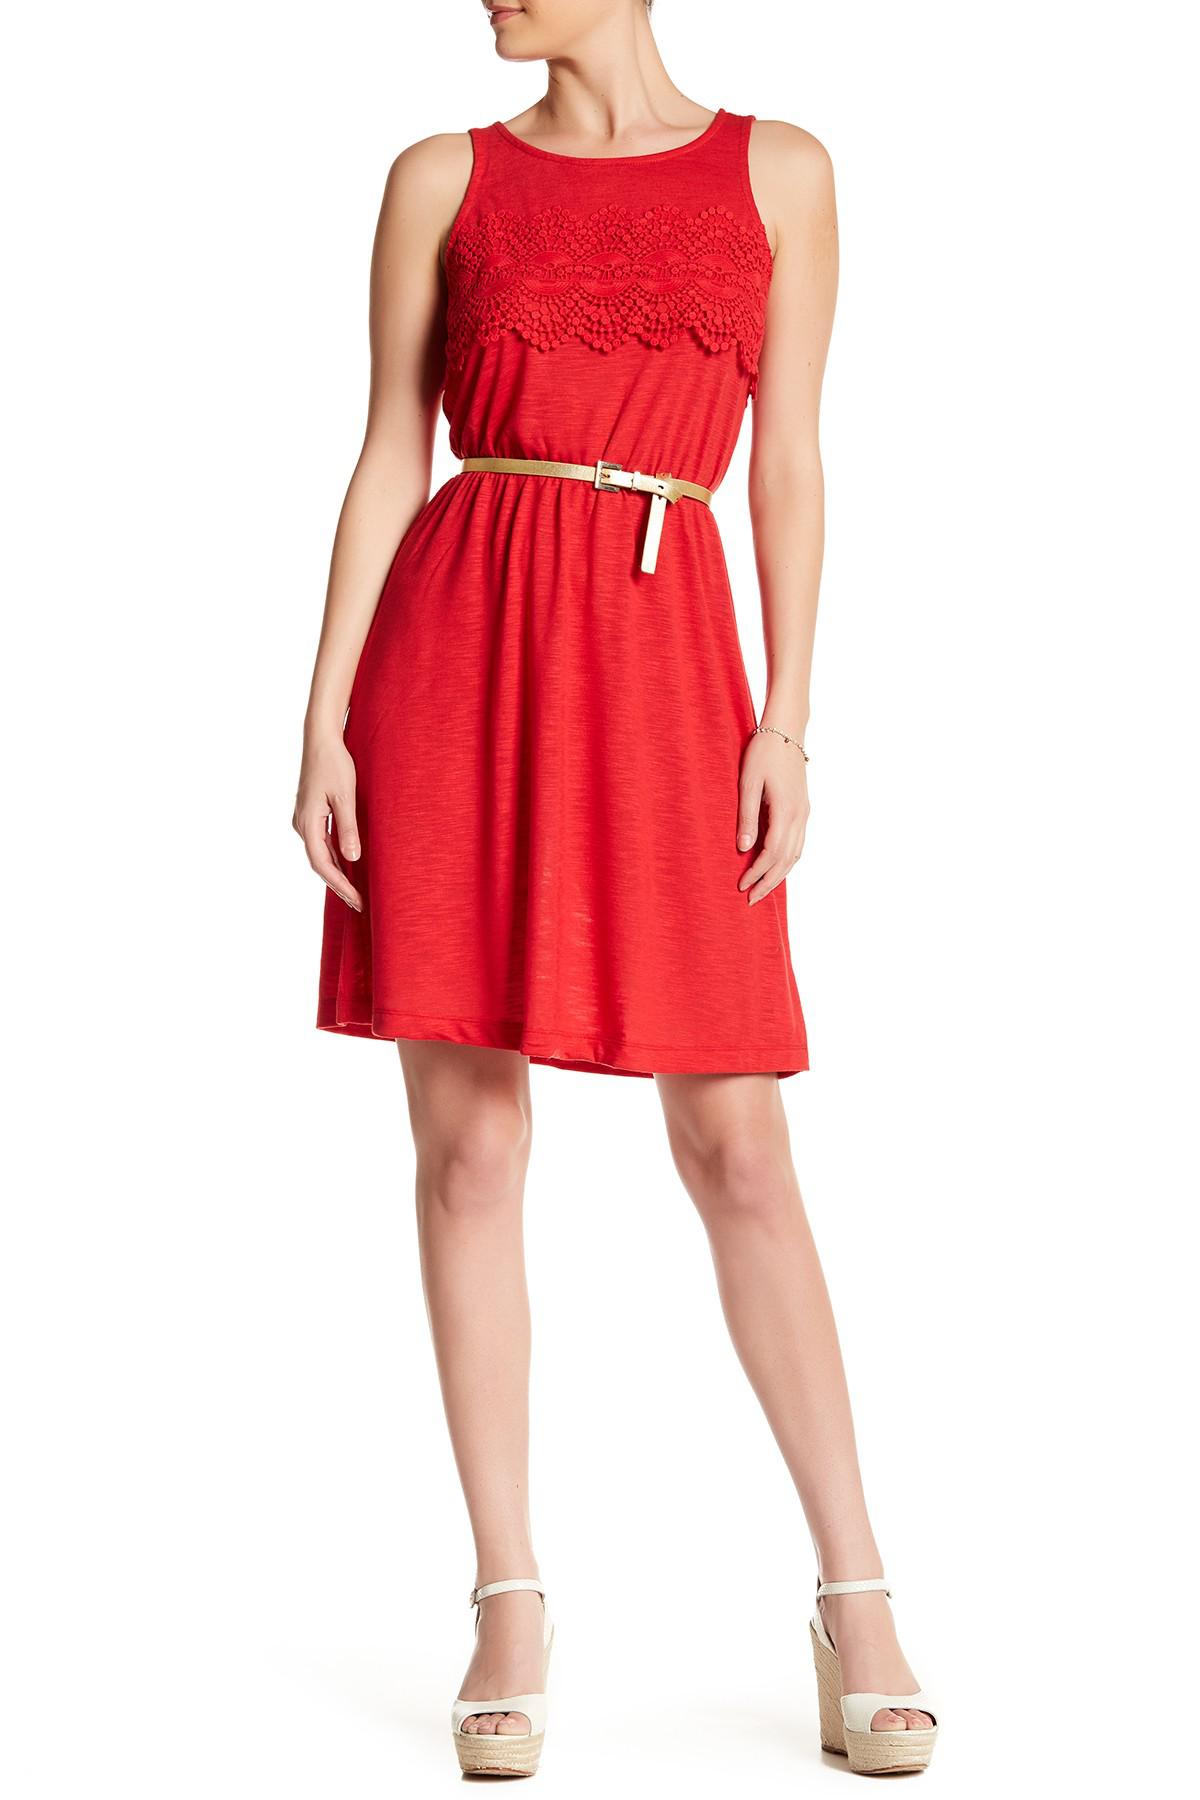 Lyst - Joe Fresh Lace Trim Dress in Red